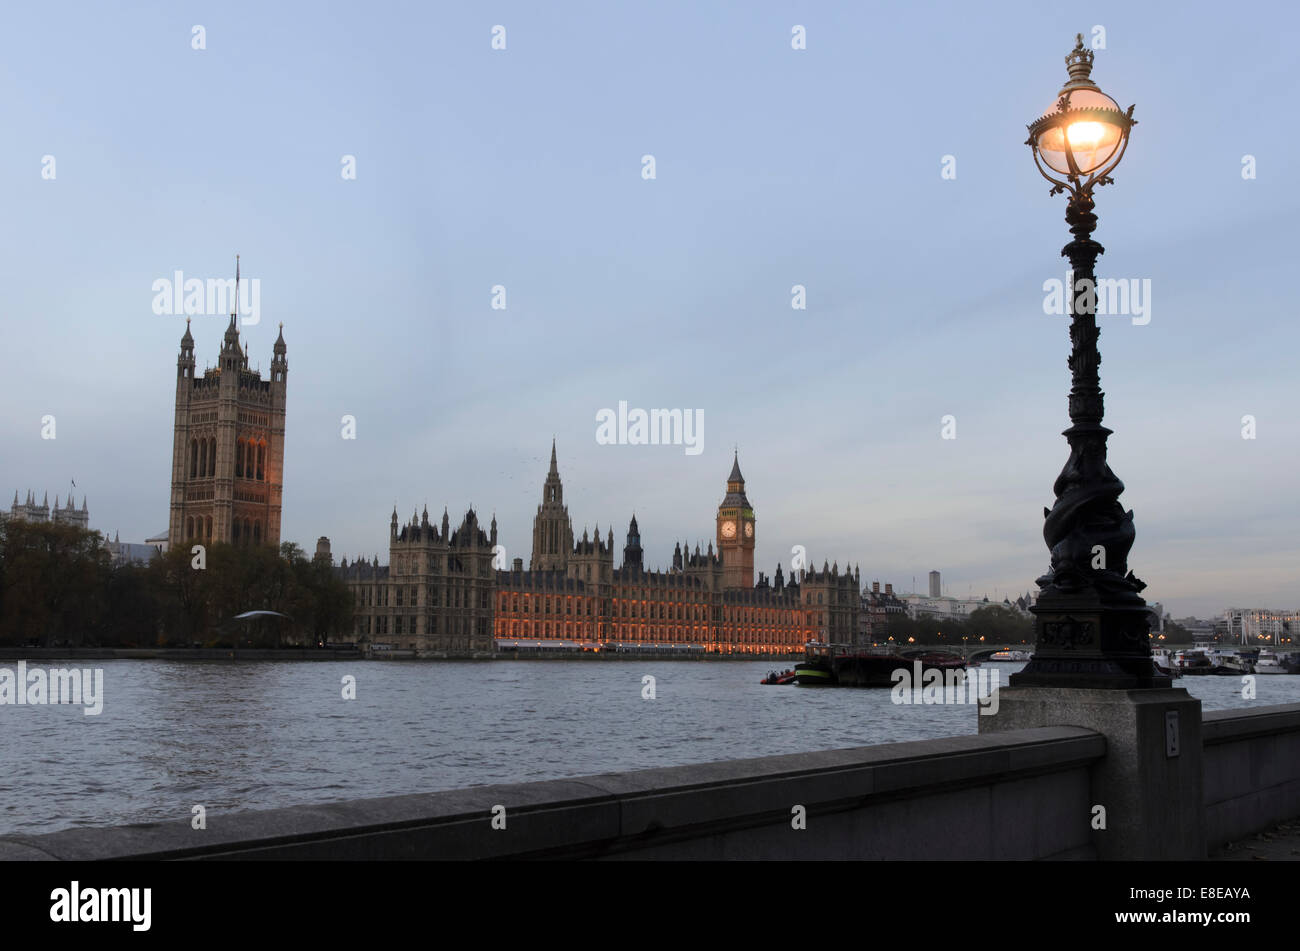 Westminster Palace at dusk - London, England Stock Photo